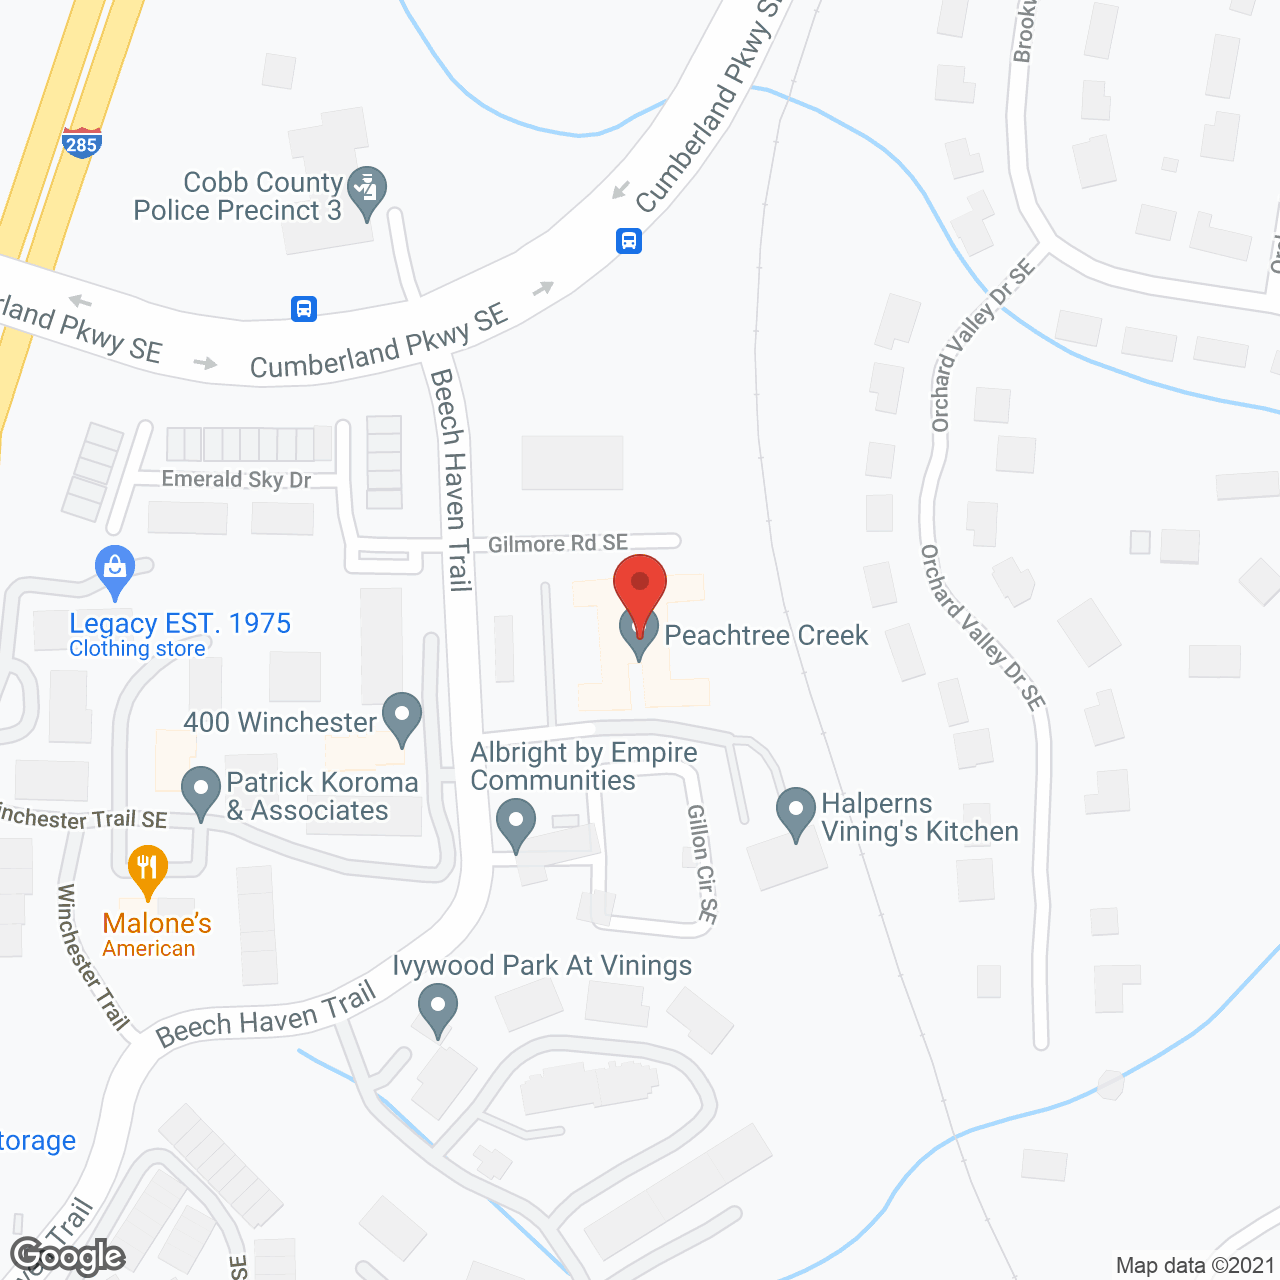 Peachtree Creek in google map